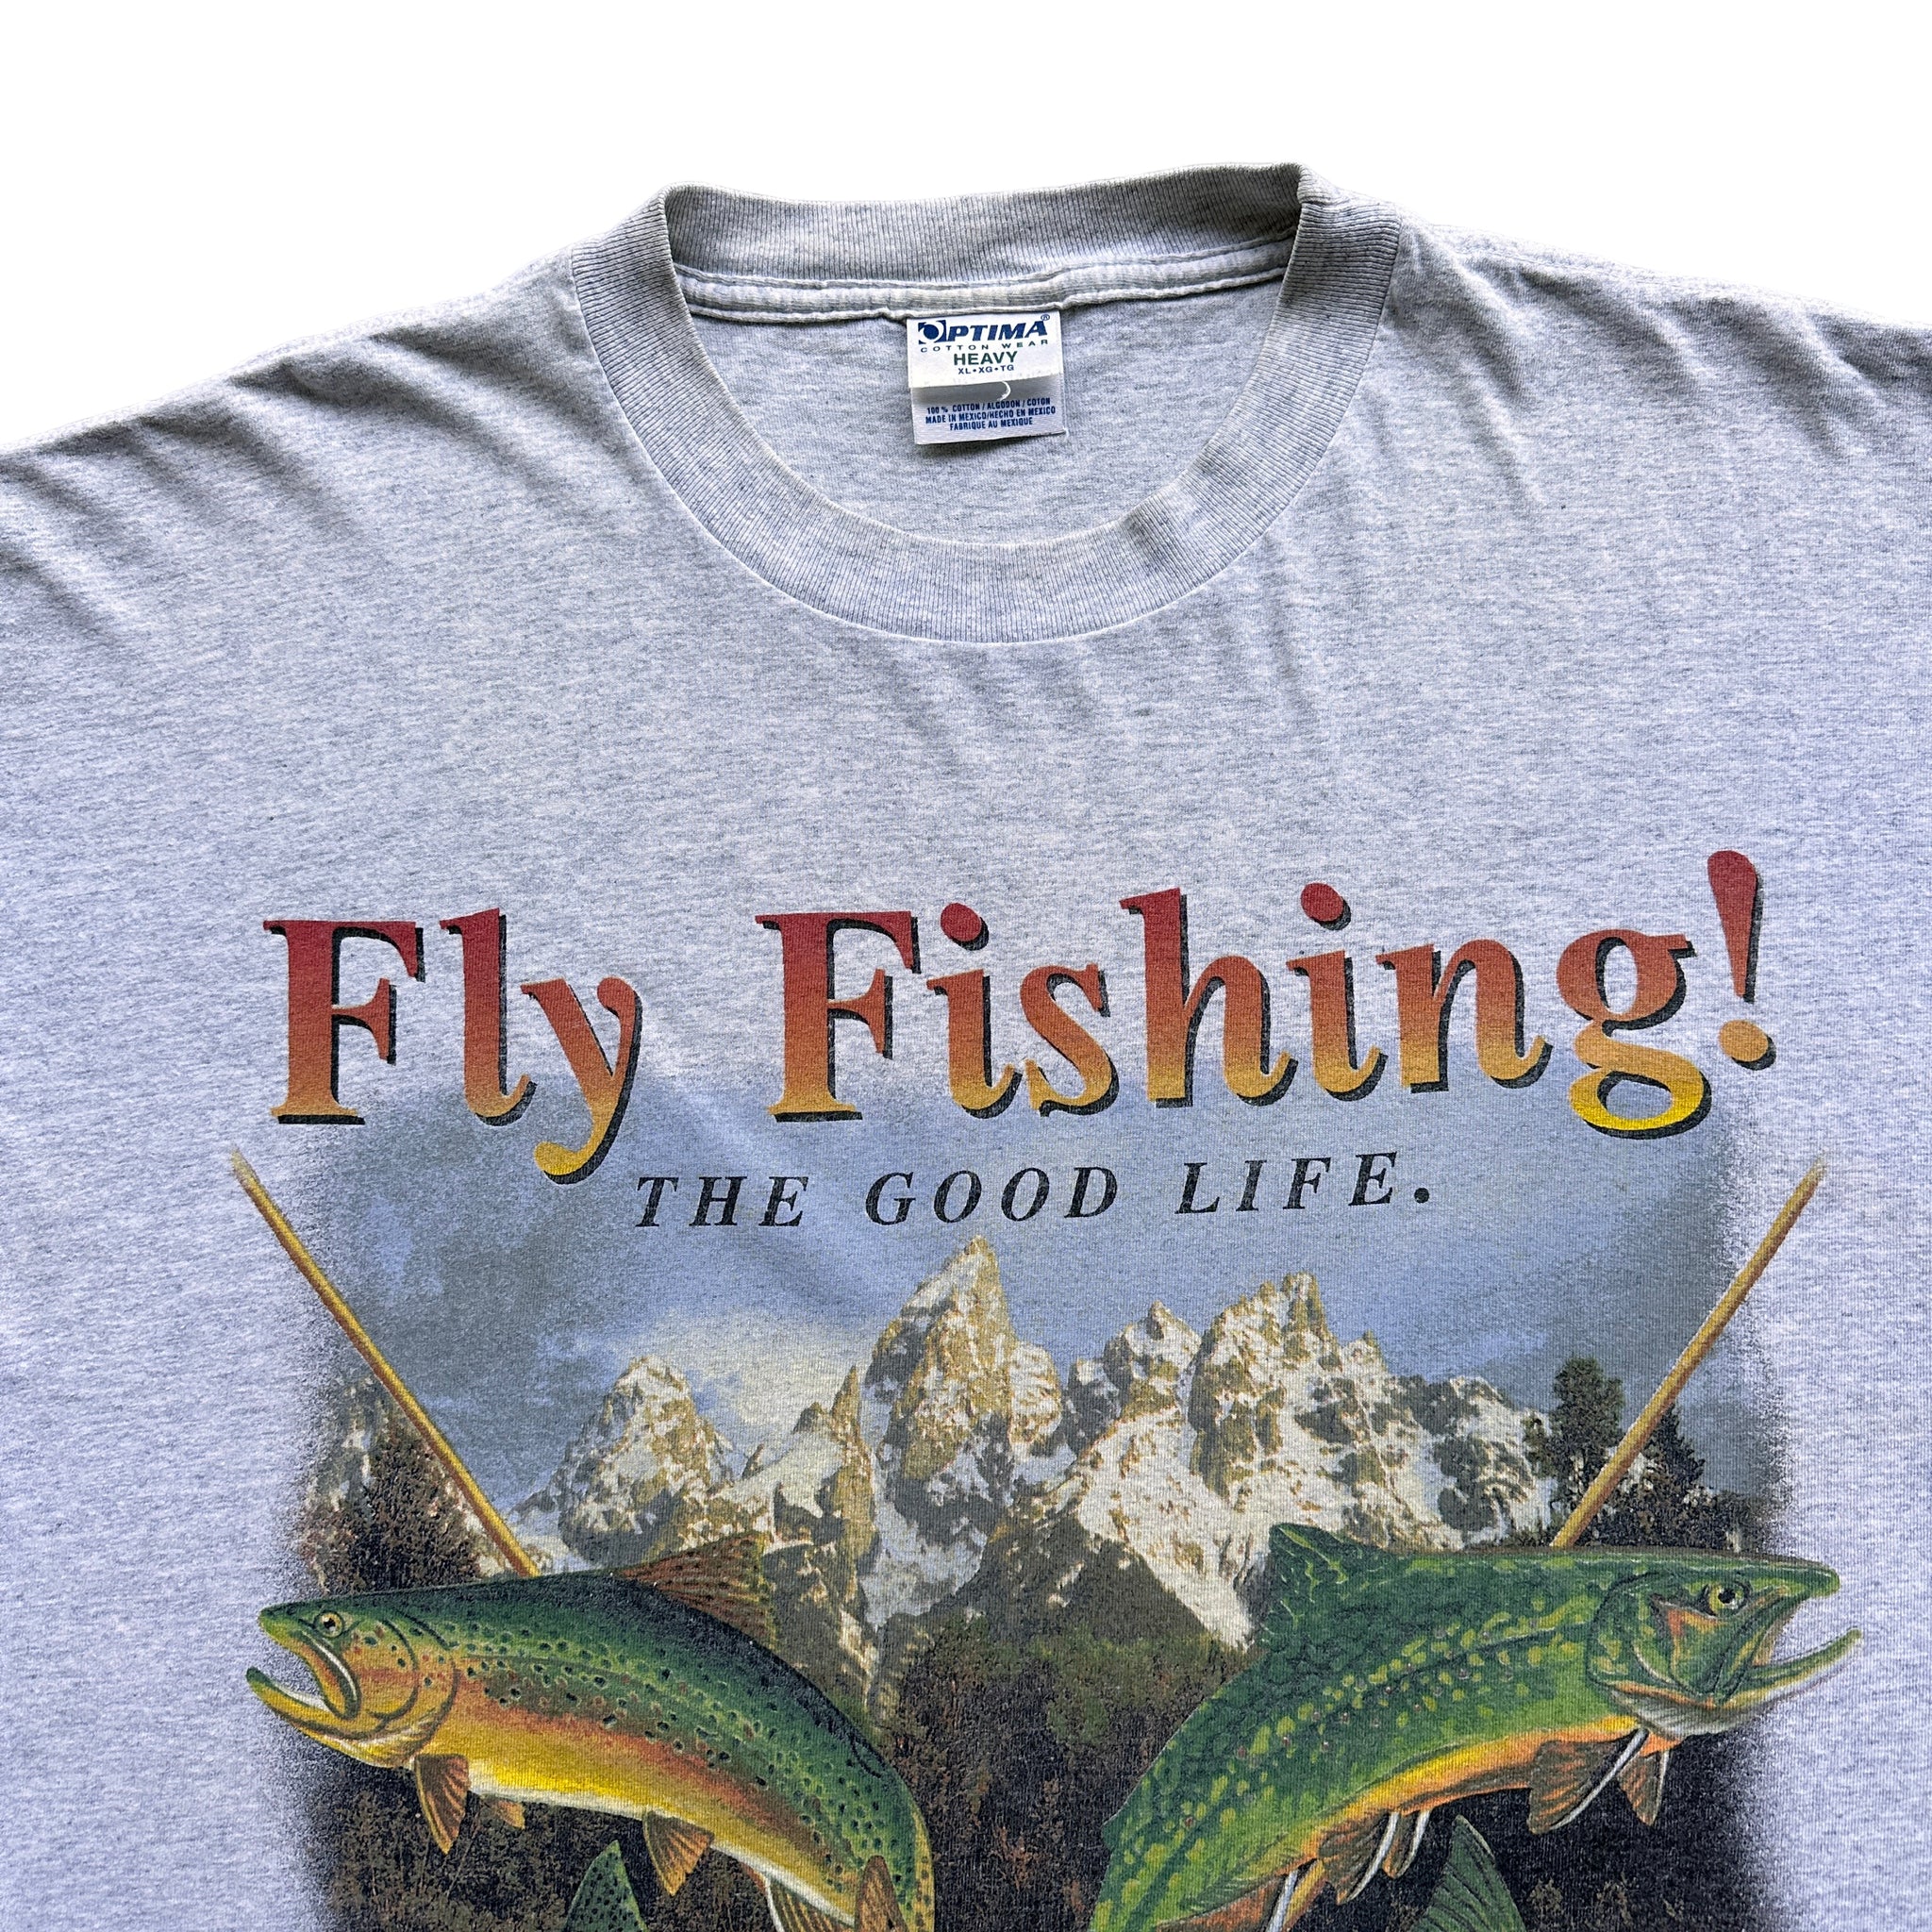 Fly fishing the good life tee XL